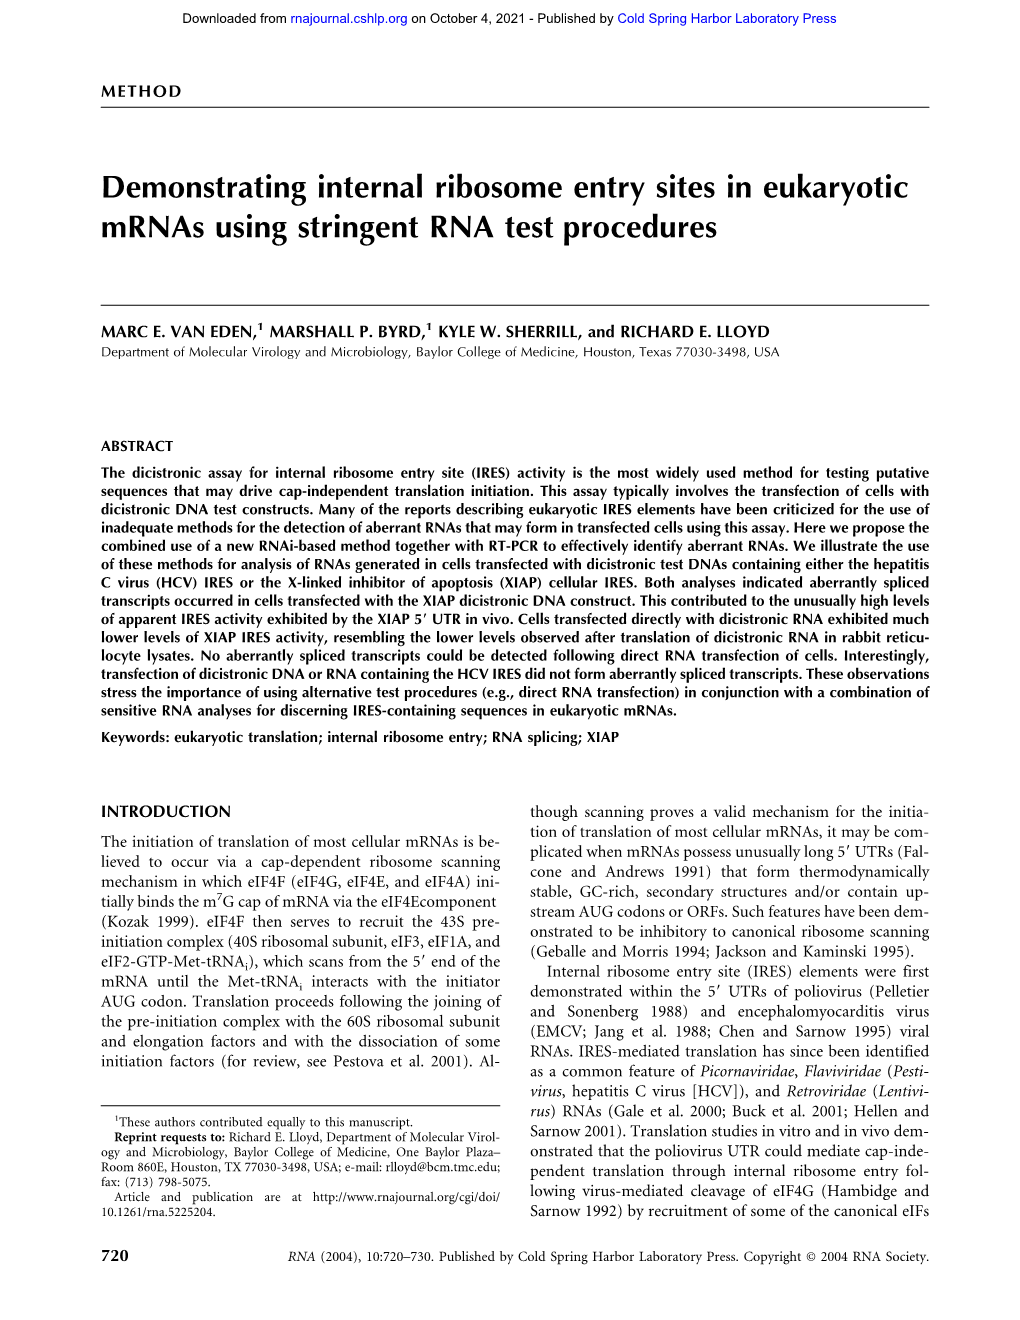 Demonstrating Internal Ribosome Entry Sites in Eukaryotic Mrnas Using Stringent RNA Test Procedures